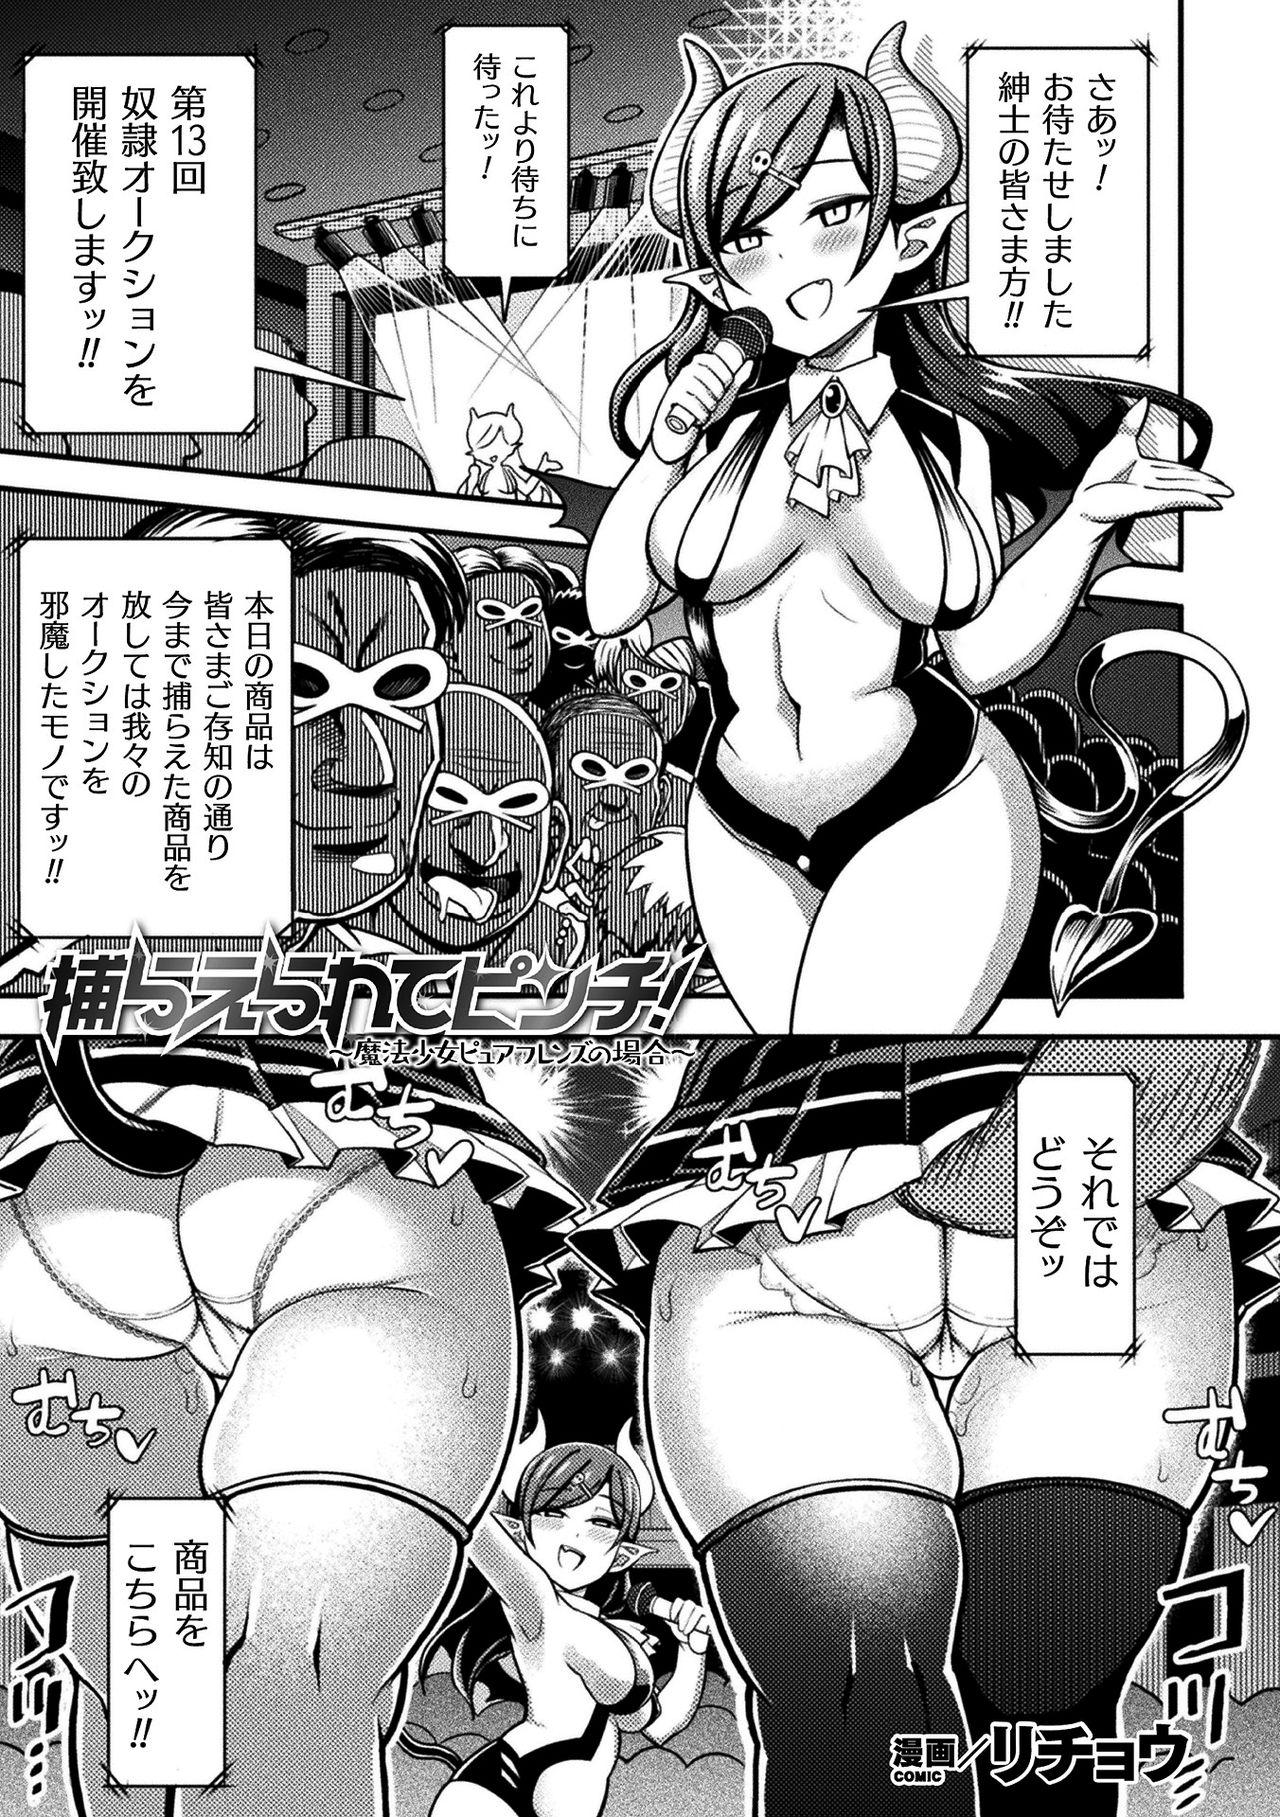 2D Comic Magazine Mahou Shoujo Seidorei Auction e Youkoso! Vol. 1 2